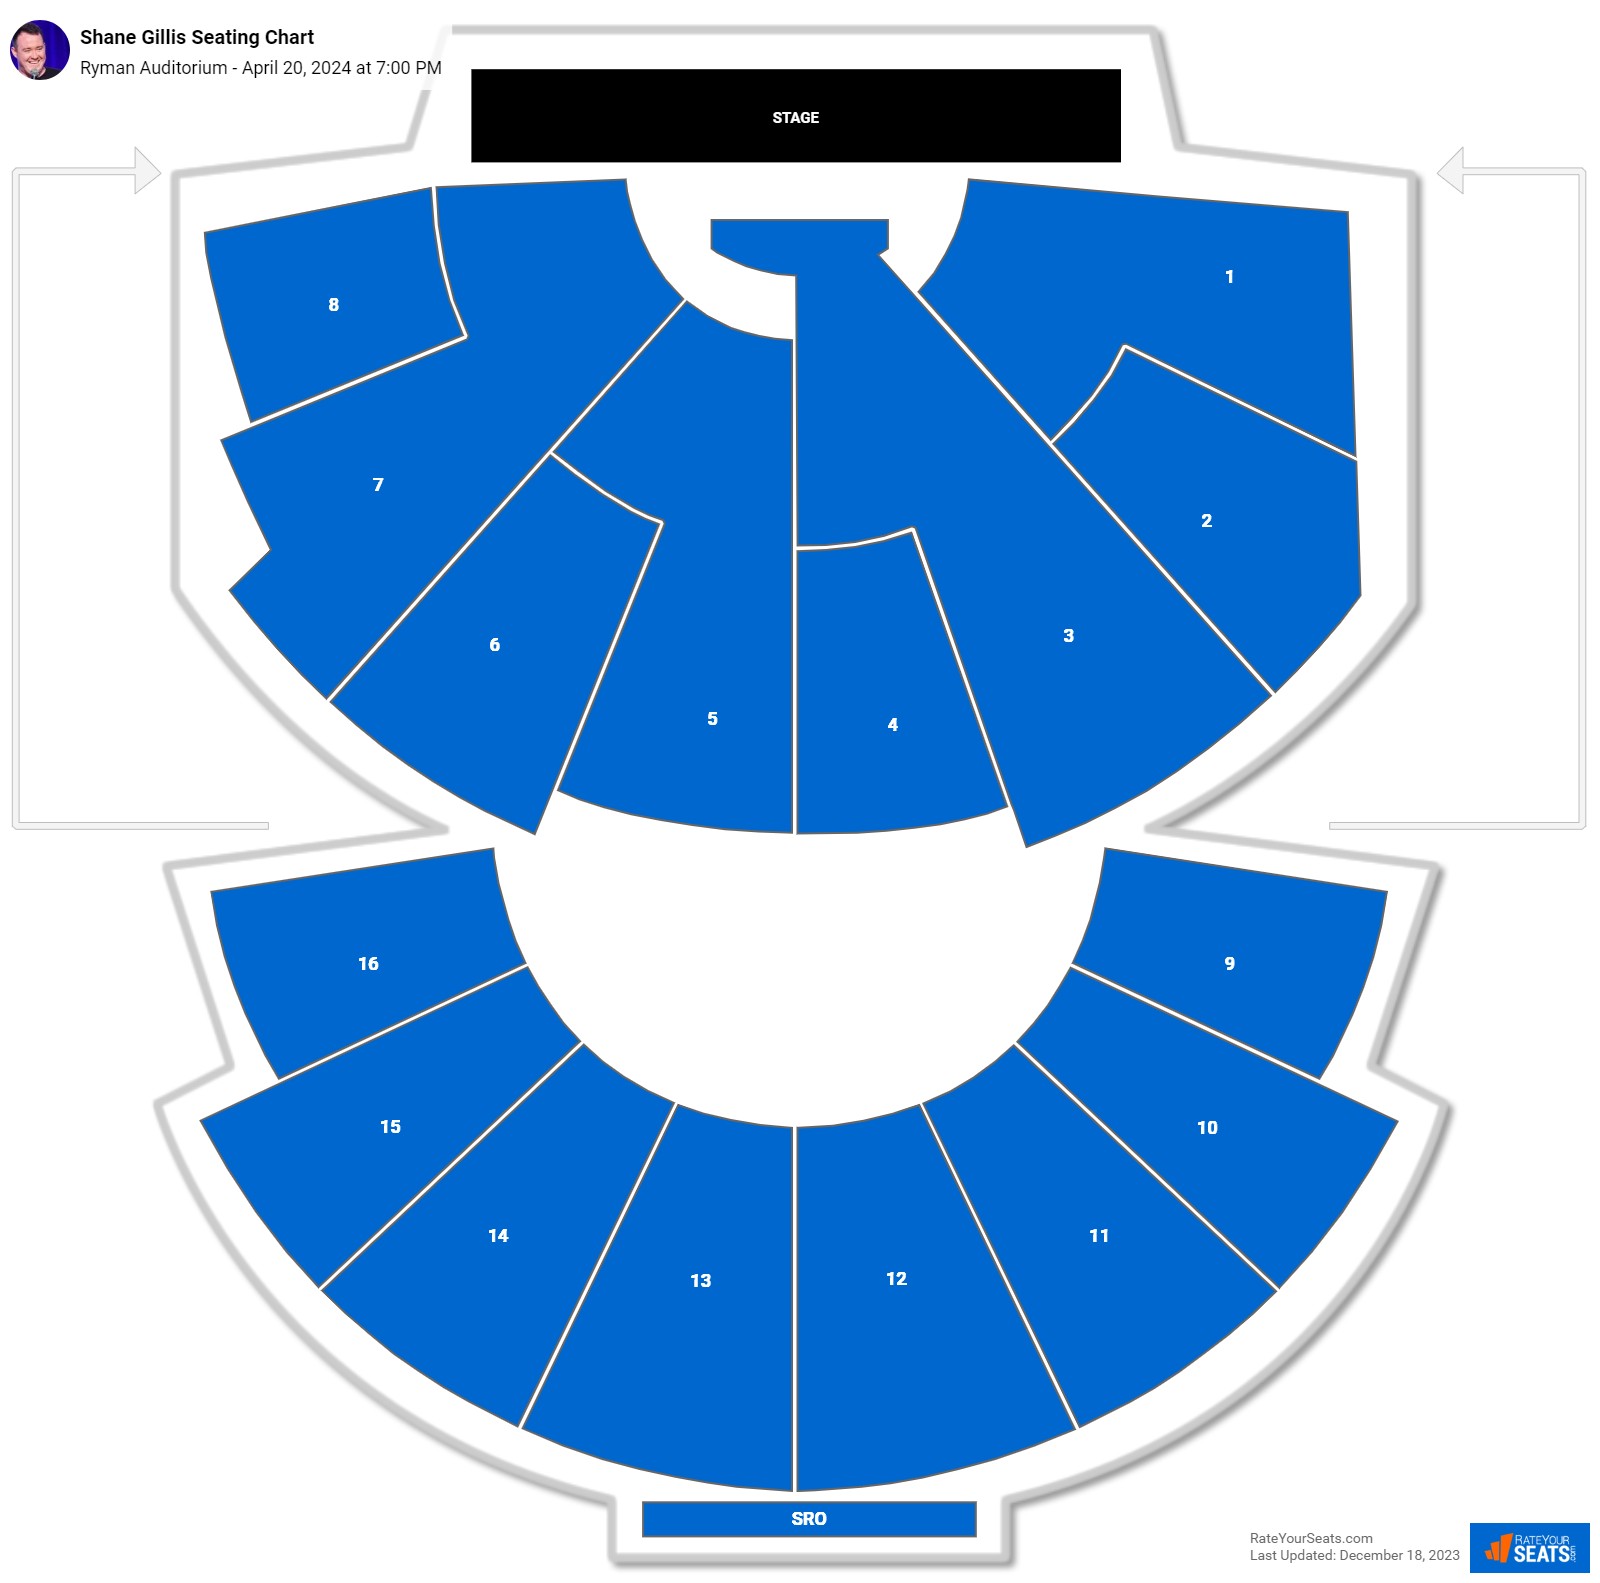 Shane Gillis seating chart Ryman Auditorium